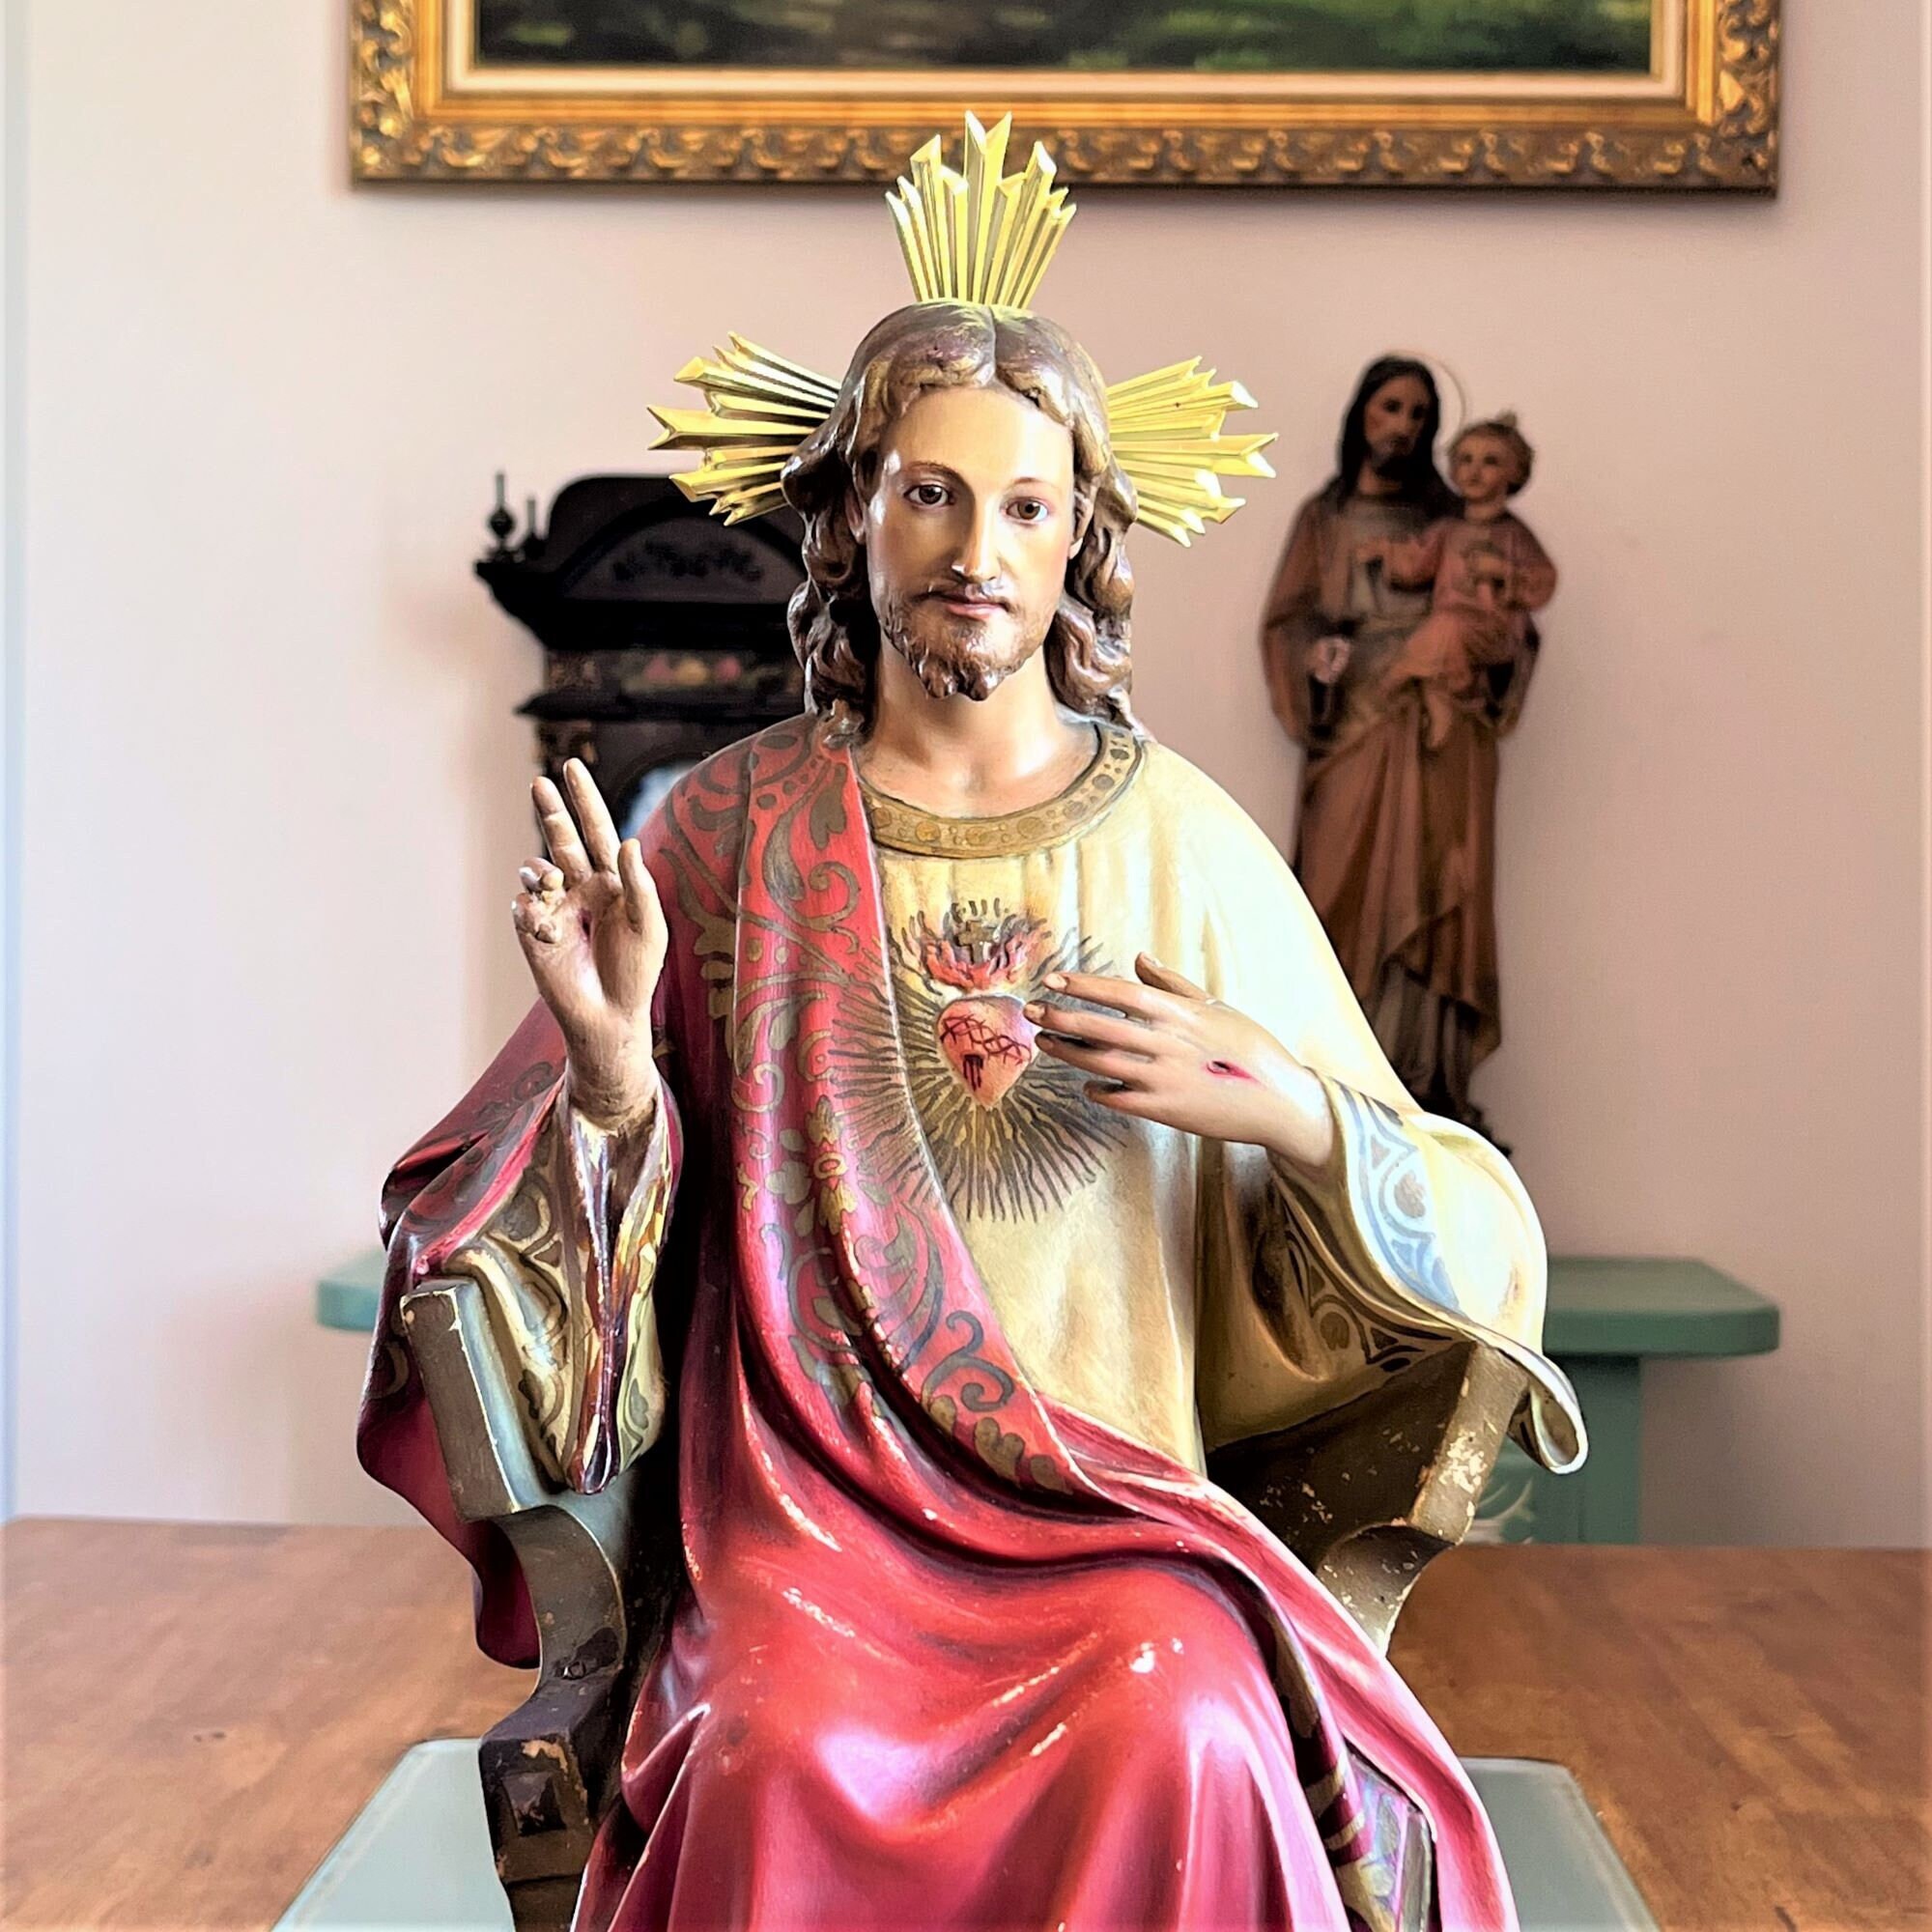 33 Inch Sacred Heart of Jesus Italian Statue Sculpture Vittoria Collection  Made in Italy Indoor Outdoor Garden オーナメント、オブジェ